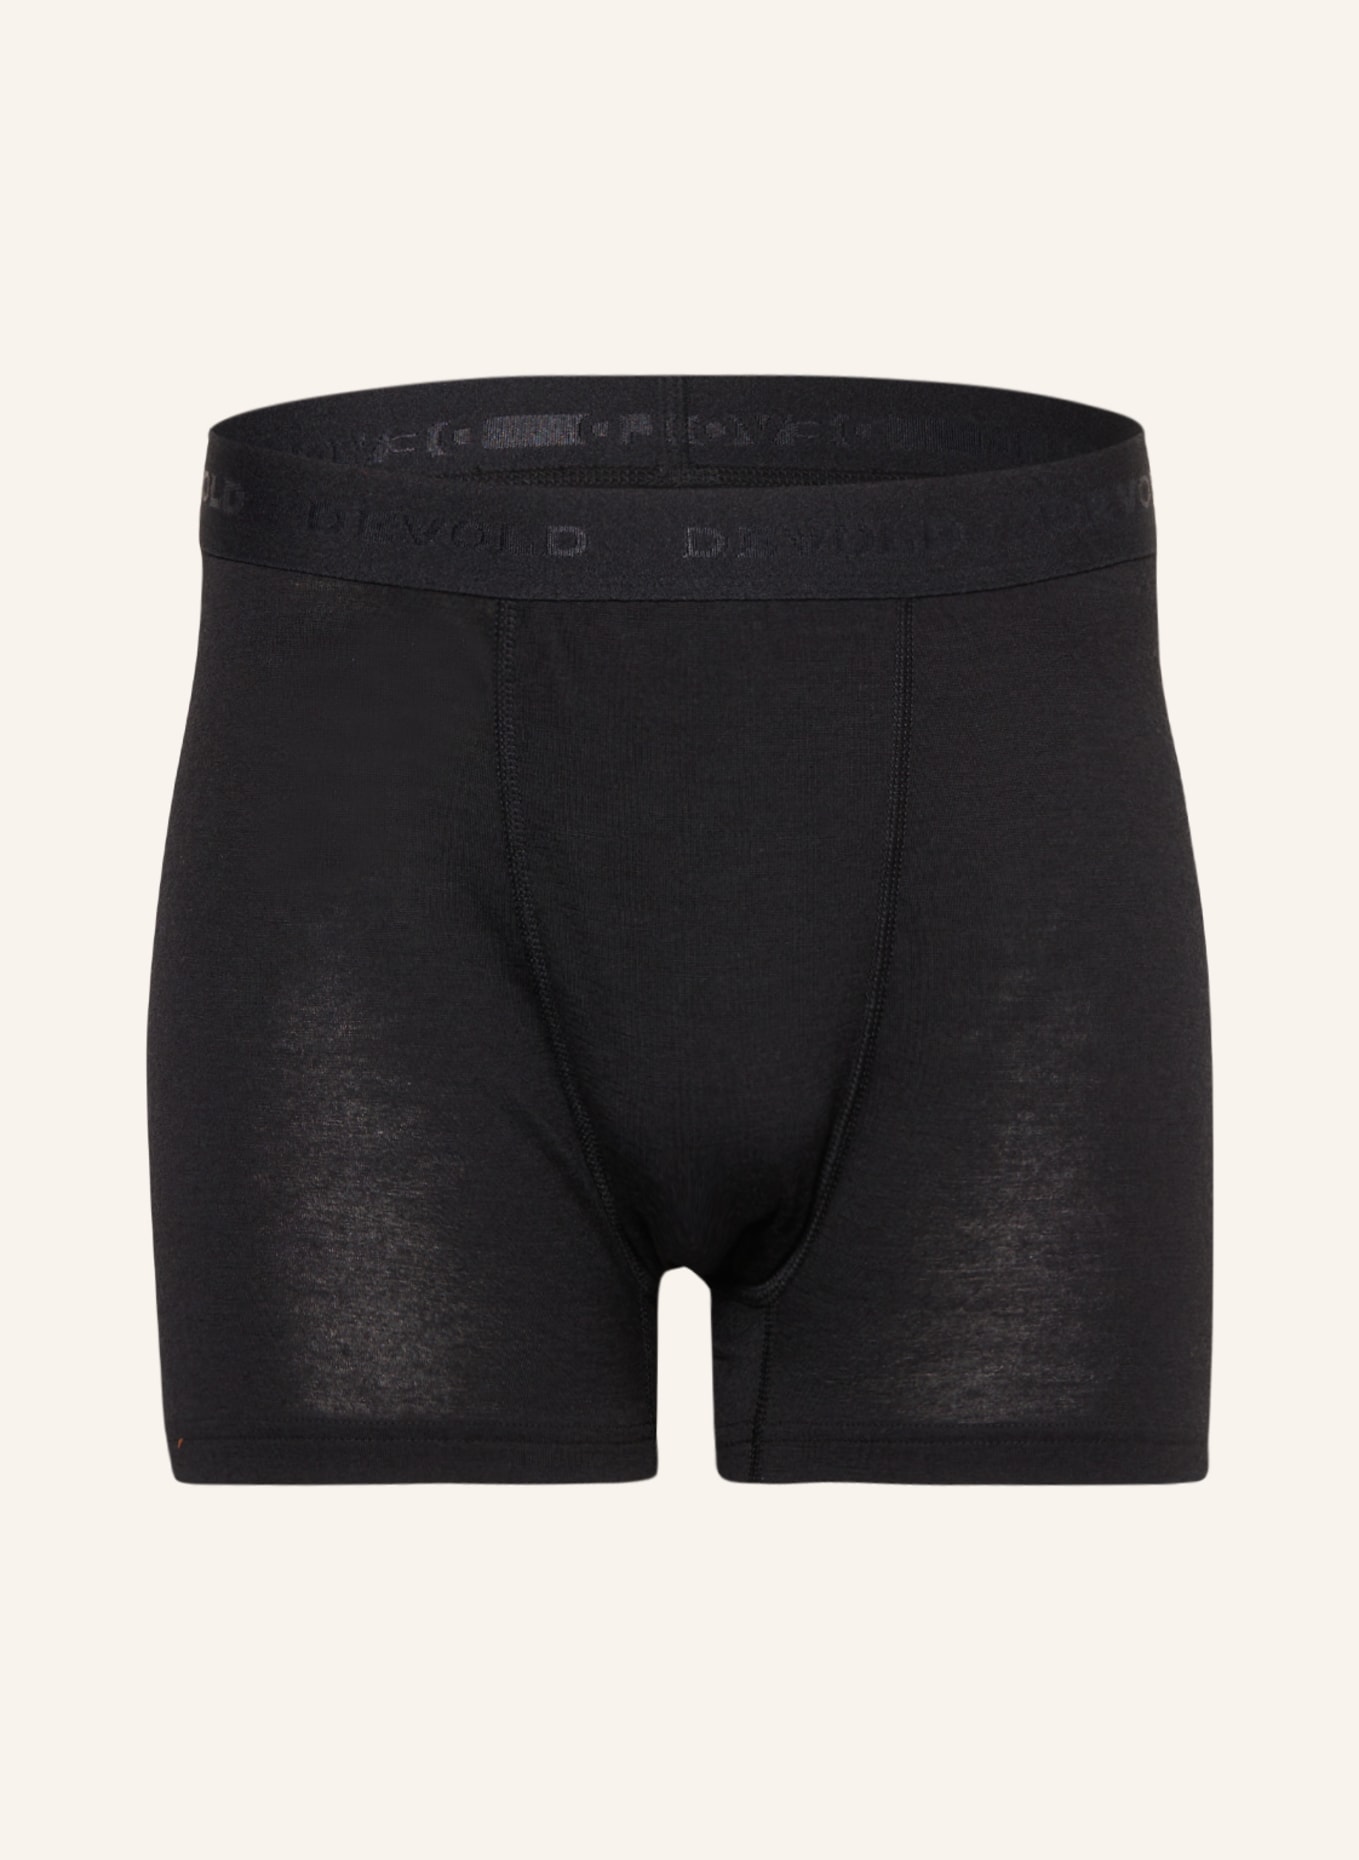 DEVOLD Functional underwear boxer shorts BREEZE MERINO 150 in black